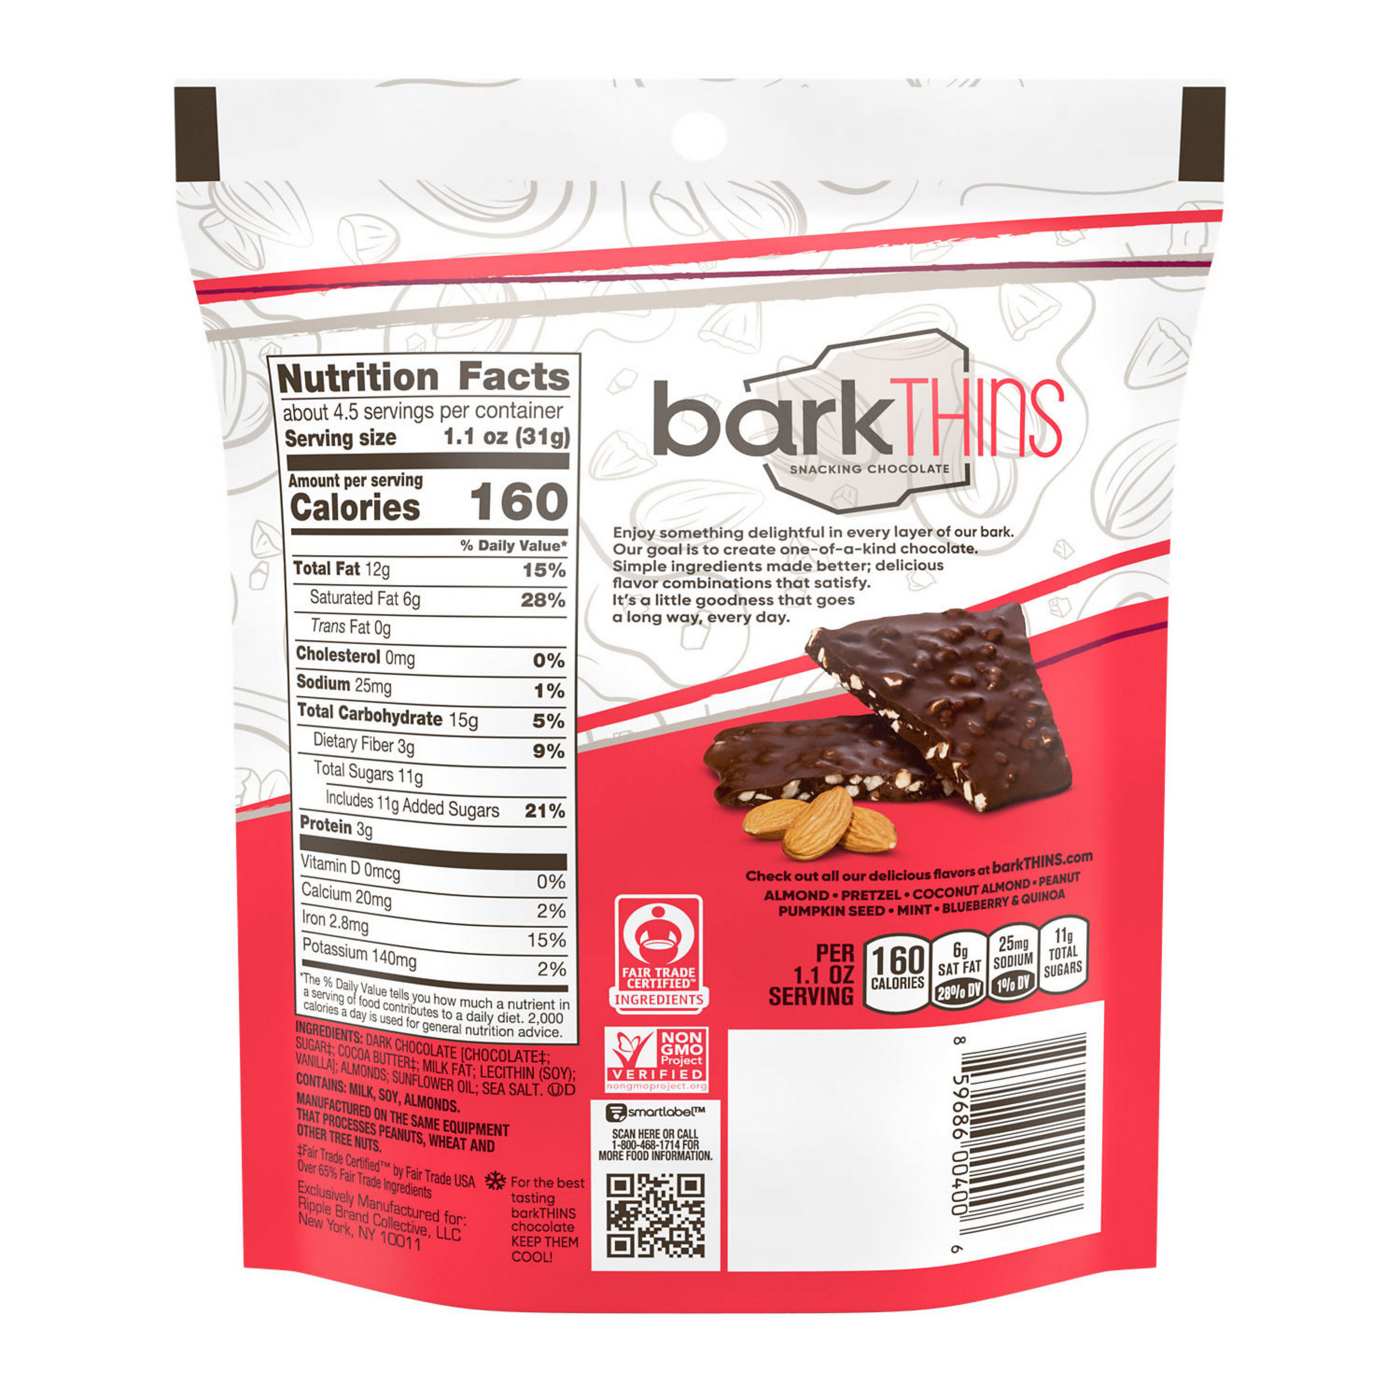 Barkthins Dark Chocolate Almond & Sea Salt Snacking Chocolate Bag; image 5 of 7